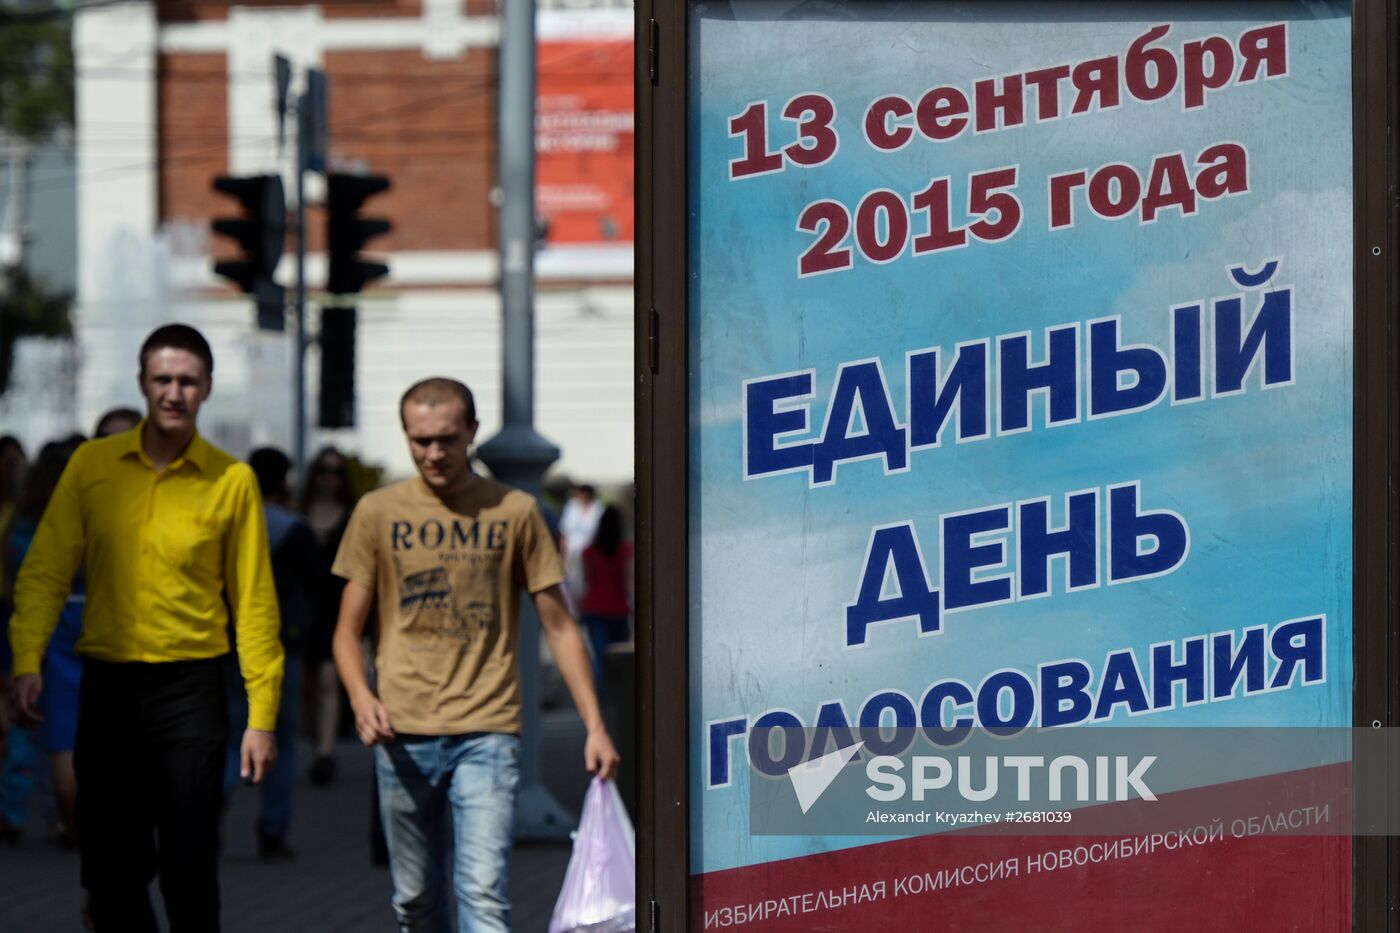 Preparing for elections in Novosibirsk